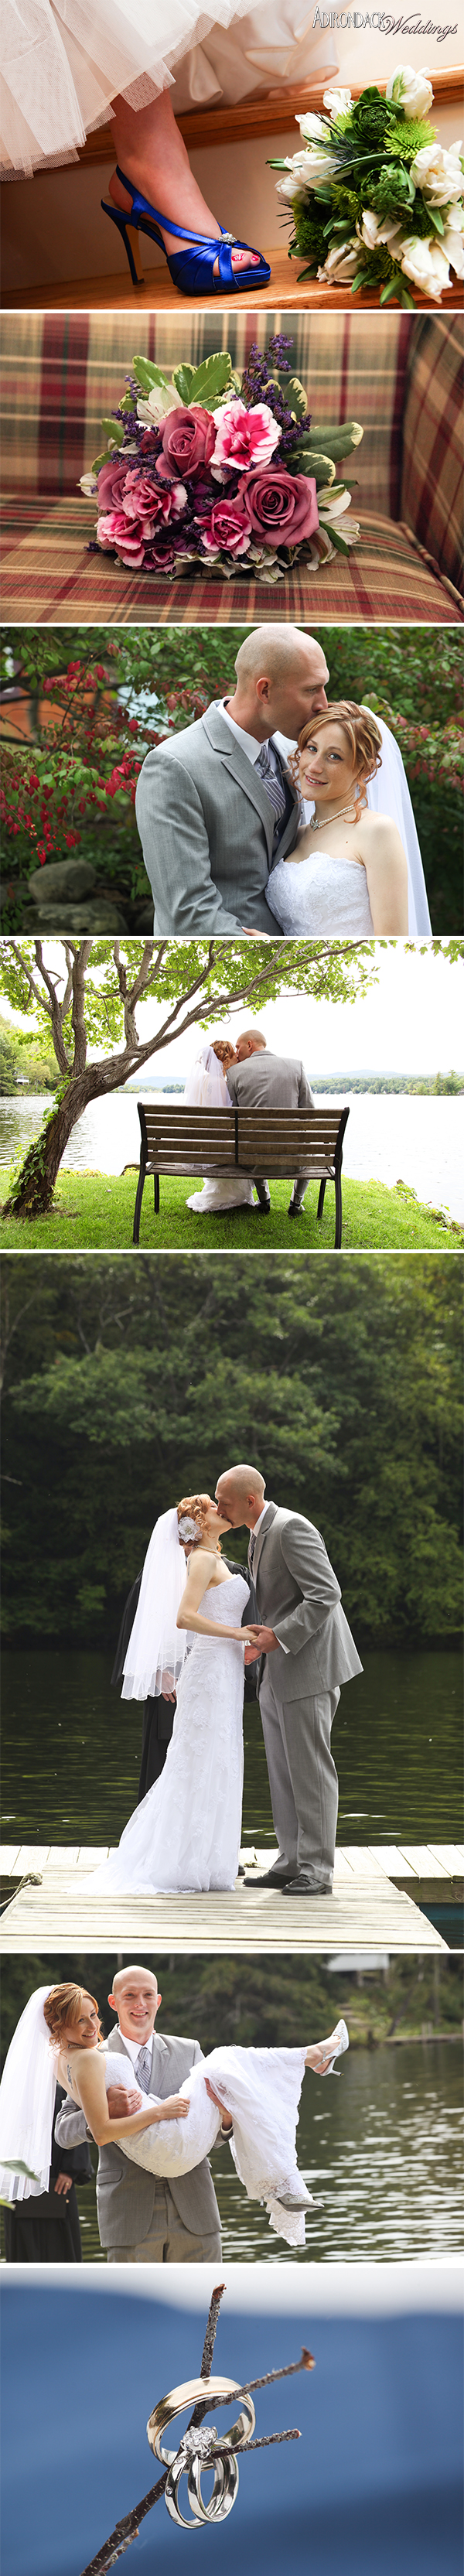 Collignon Photography | Adirondack Weddings Magazine